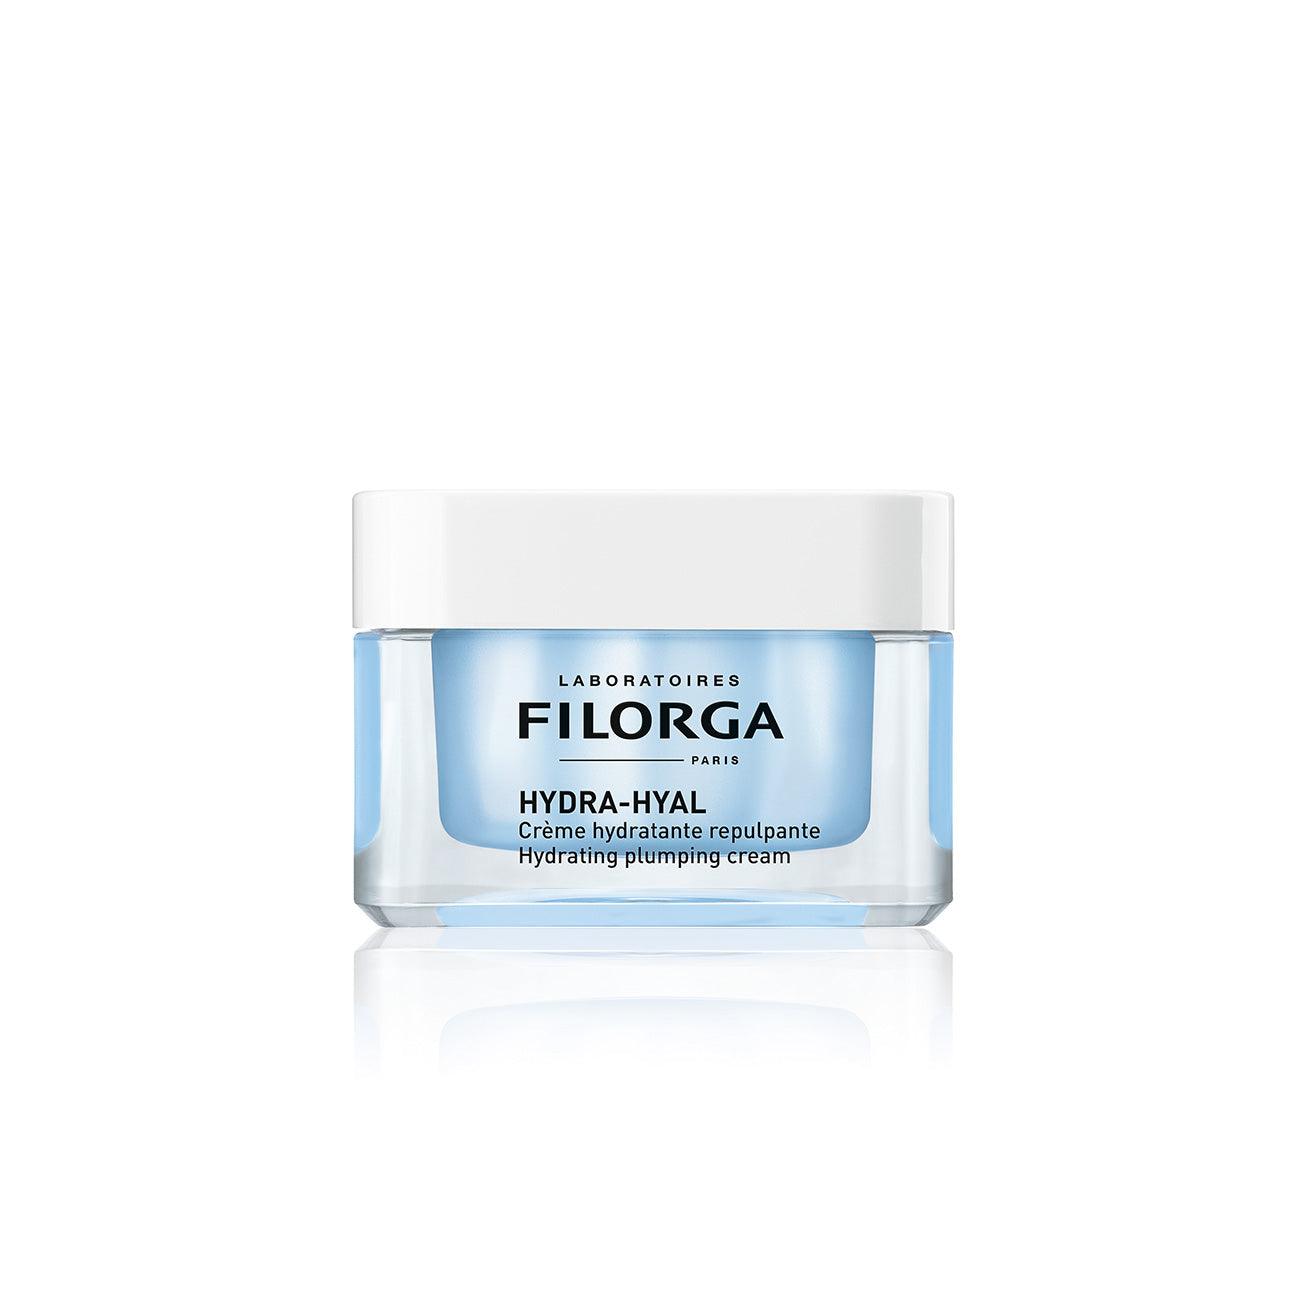 filorga hydra hyal cream